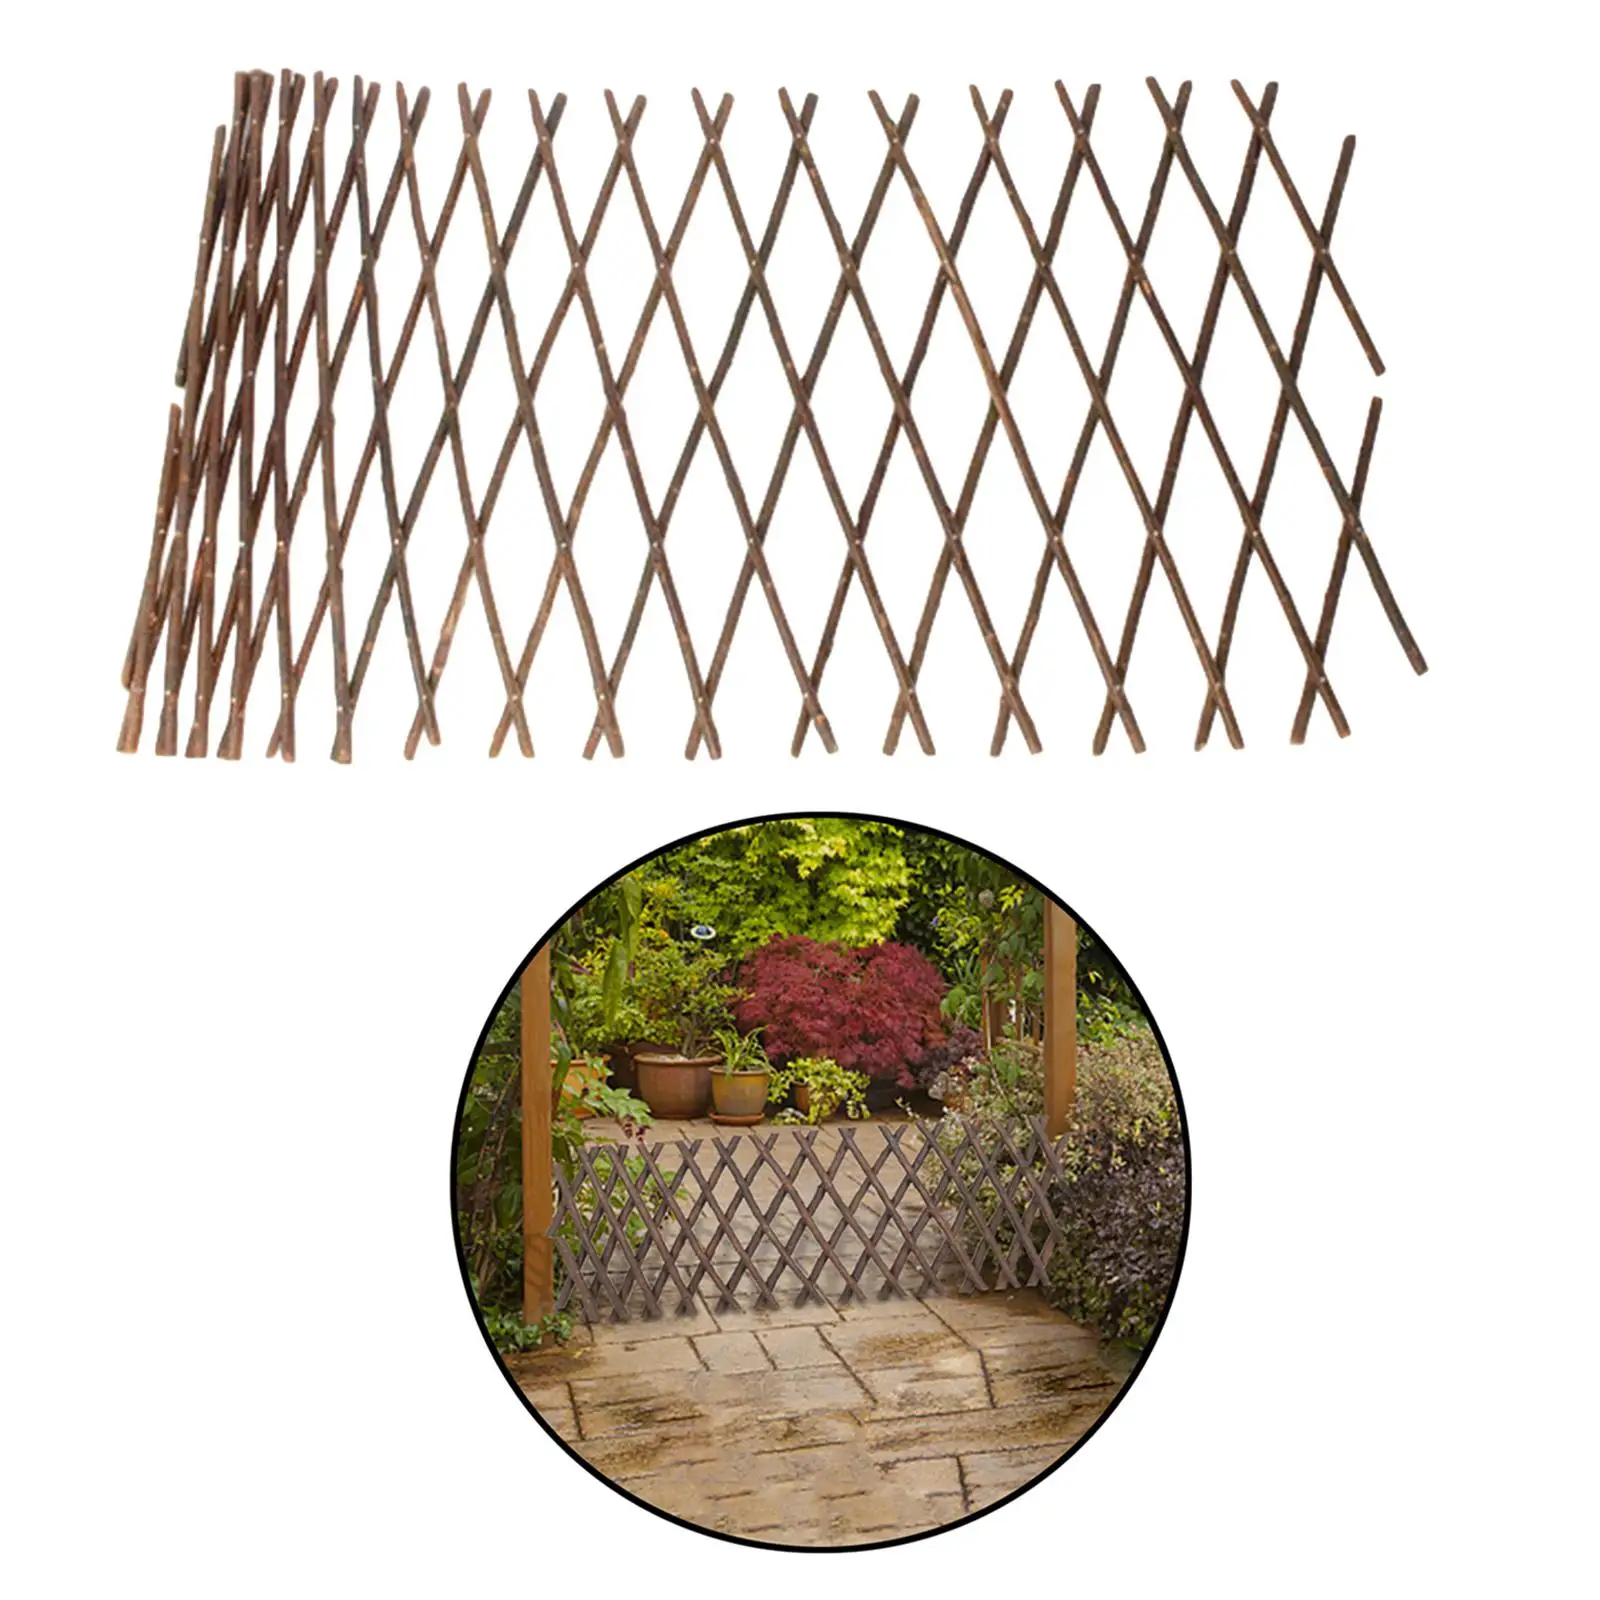 Retractable Garden Fence Trellis Adjustable Plant Climbing Support Lattice Panel Screen for Outdoor Indoor Decoration